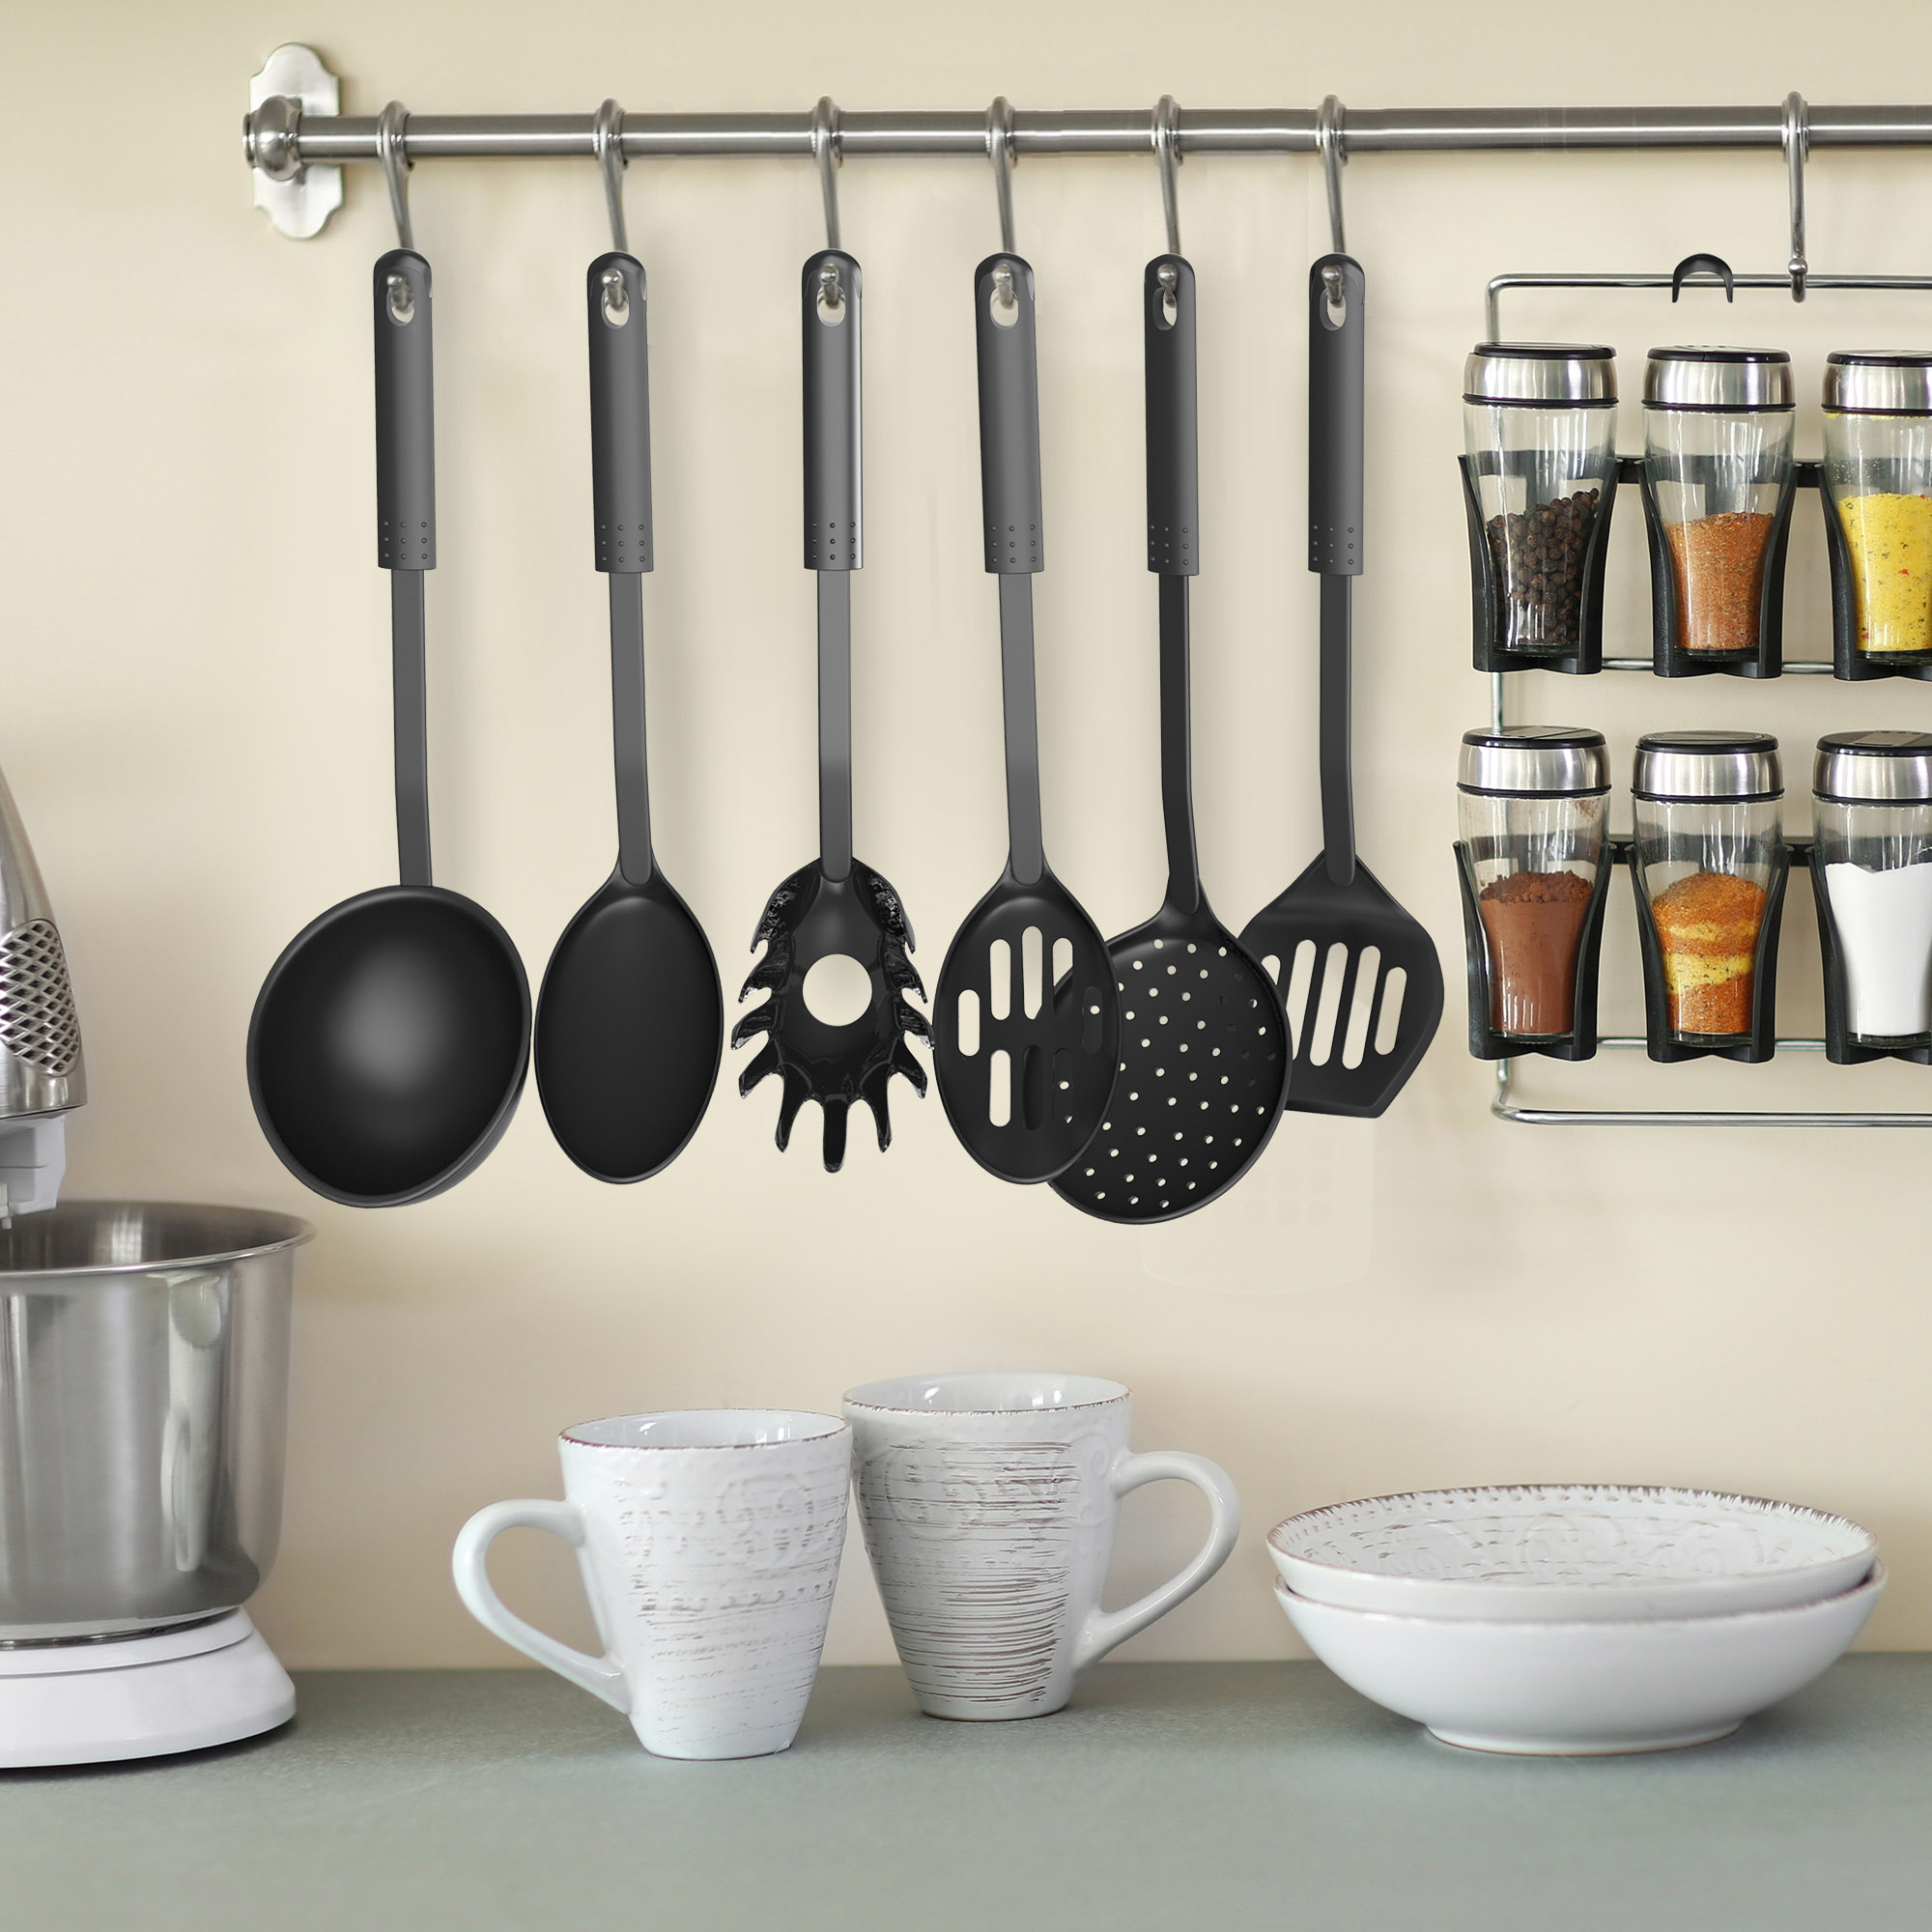 Chef Buddy 6-Piece Plastic Kitchen Utensil Set – Nonstick-Safe Tools, Black - image 5 of 8